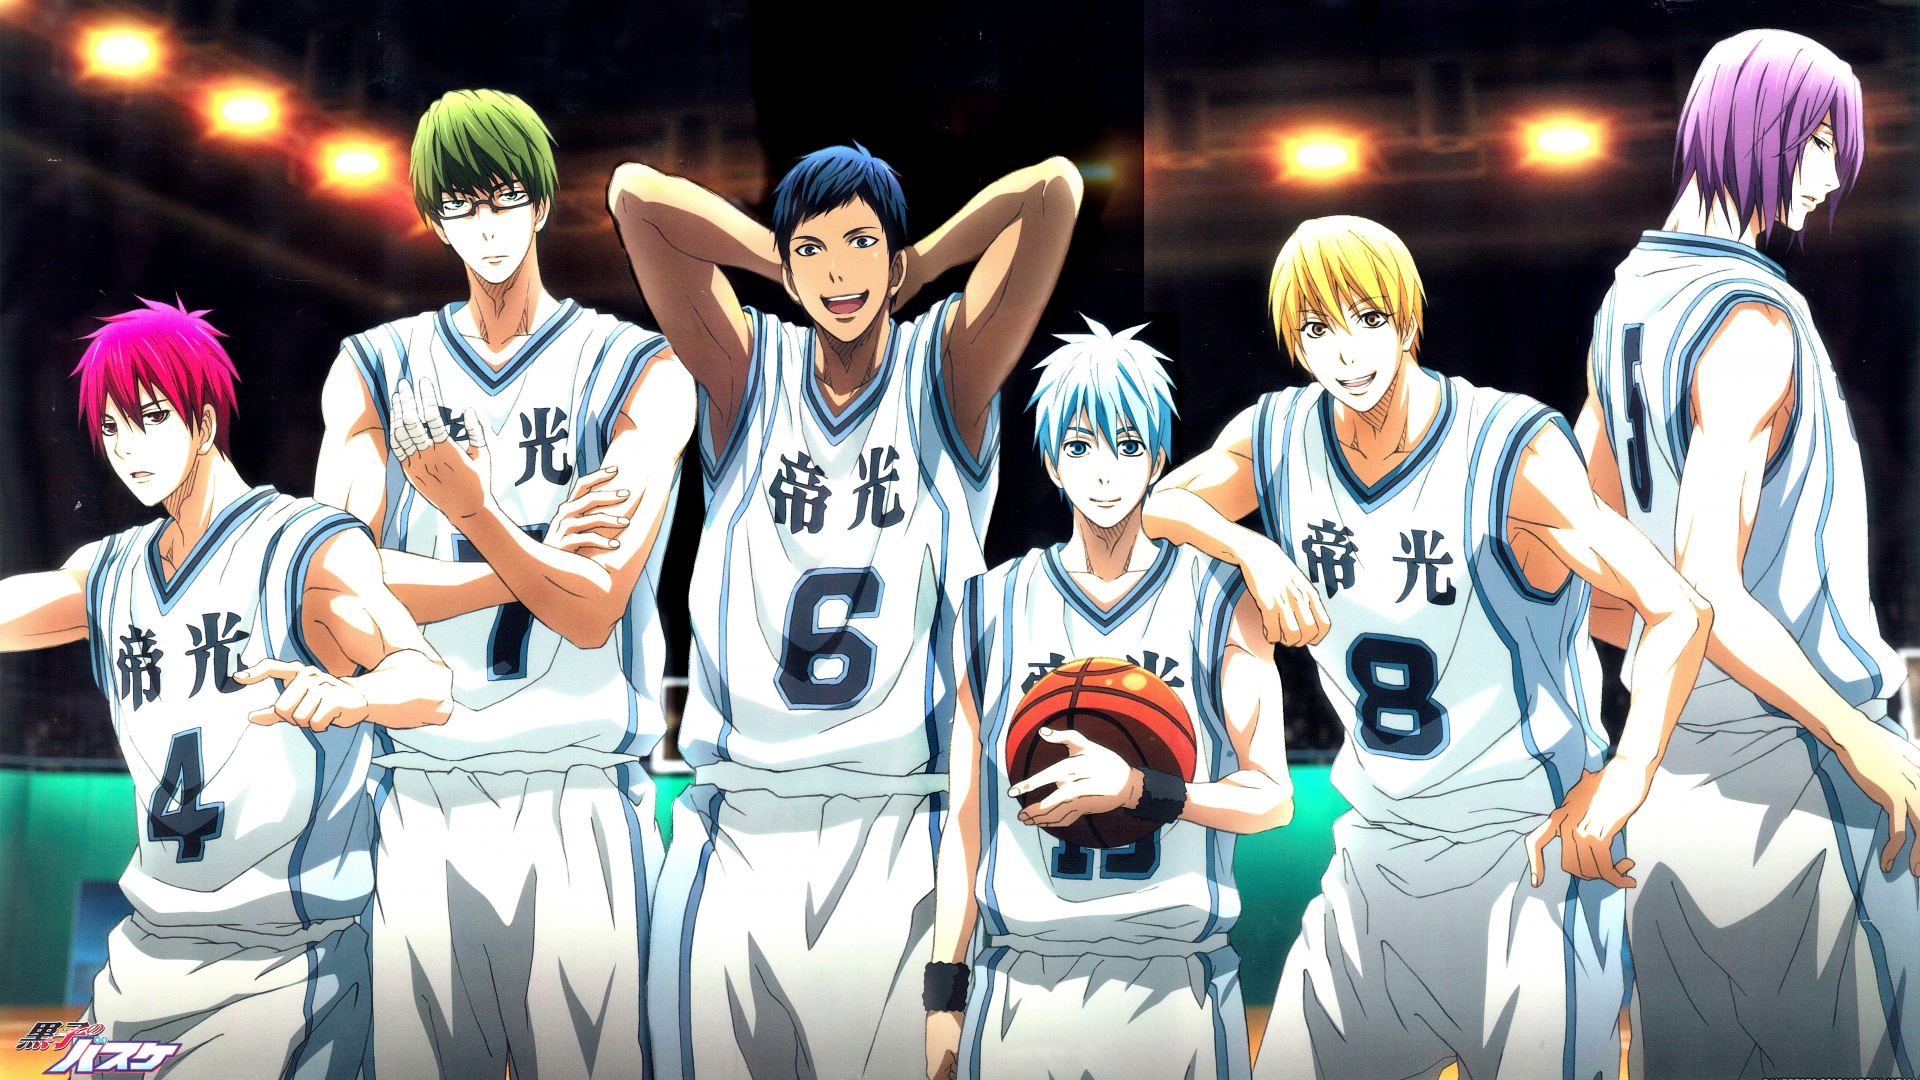 Main characters of kuroko's basketball